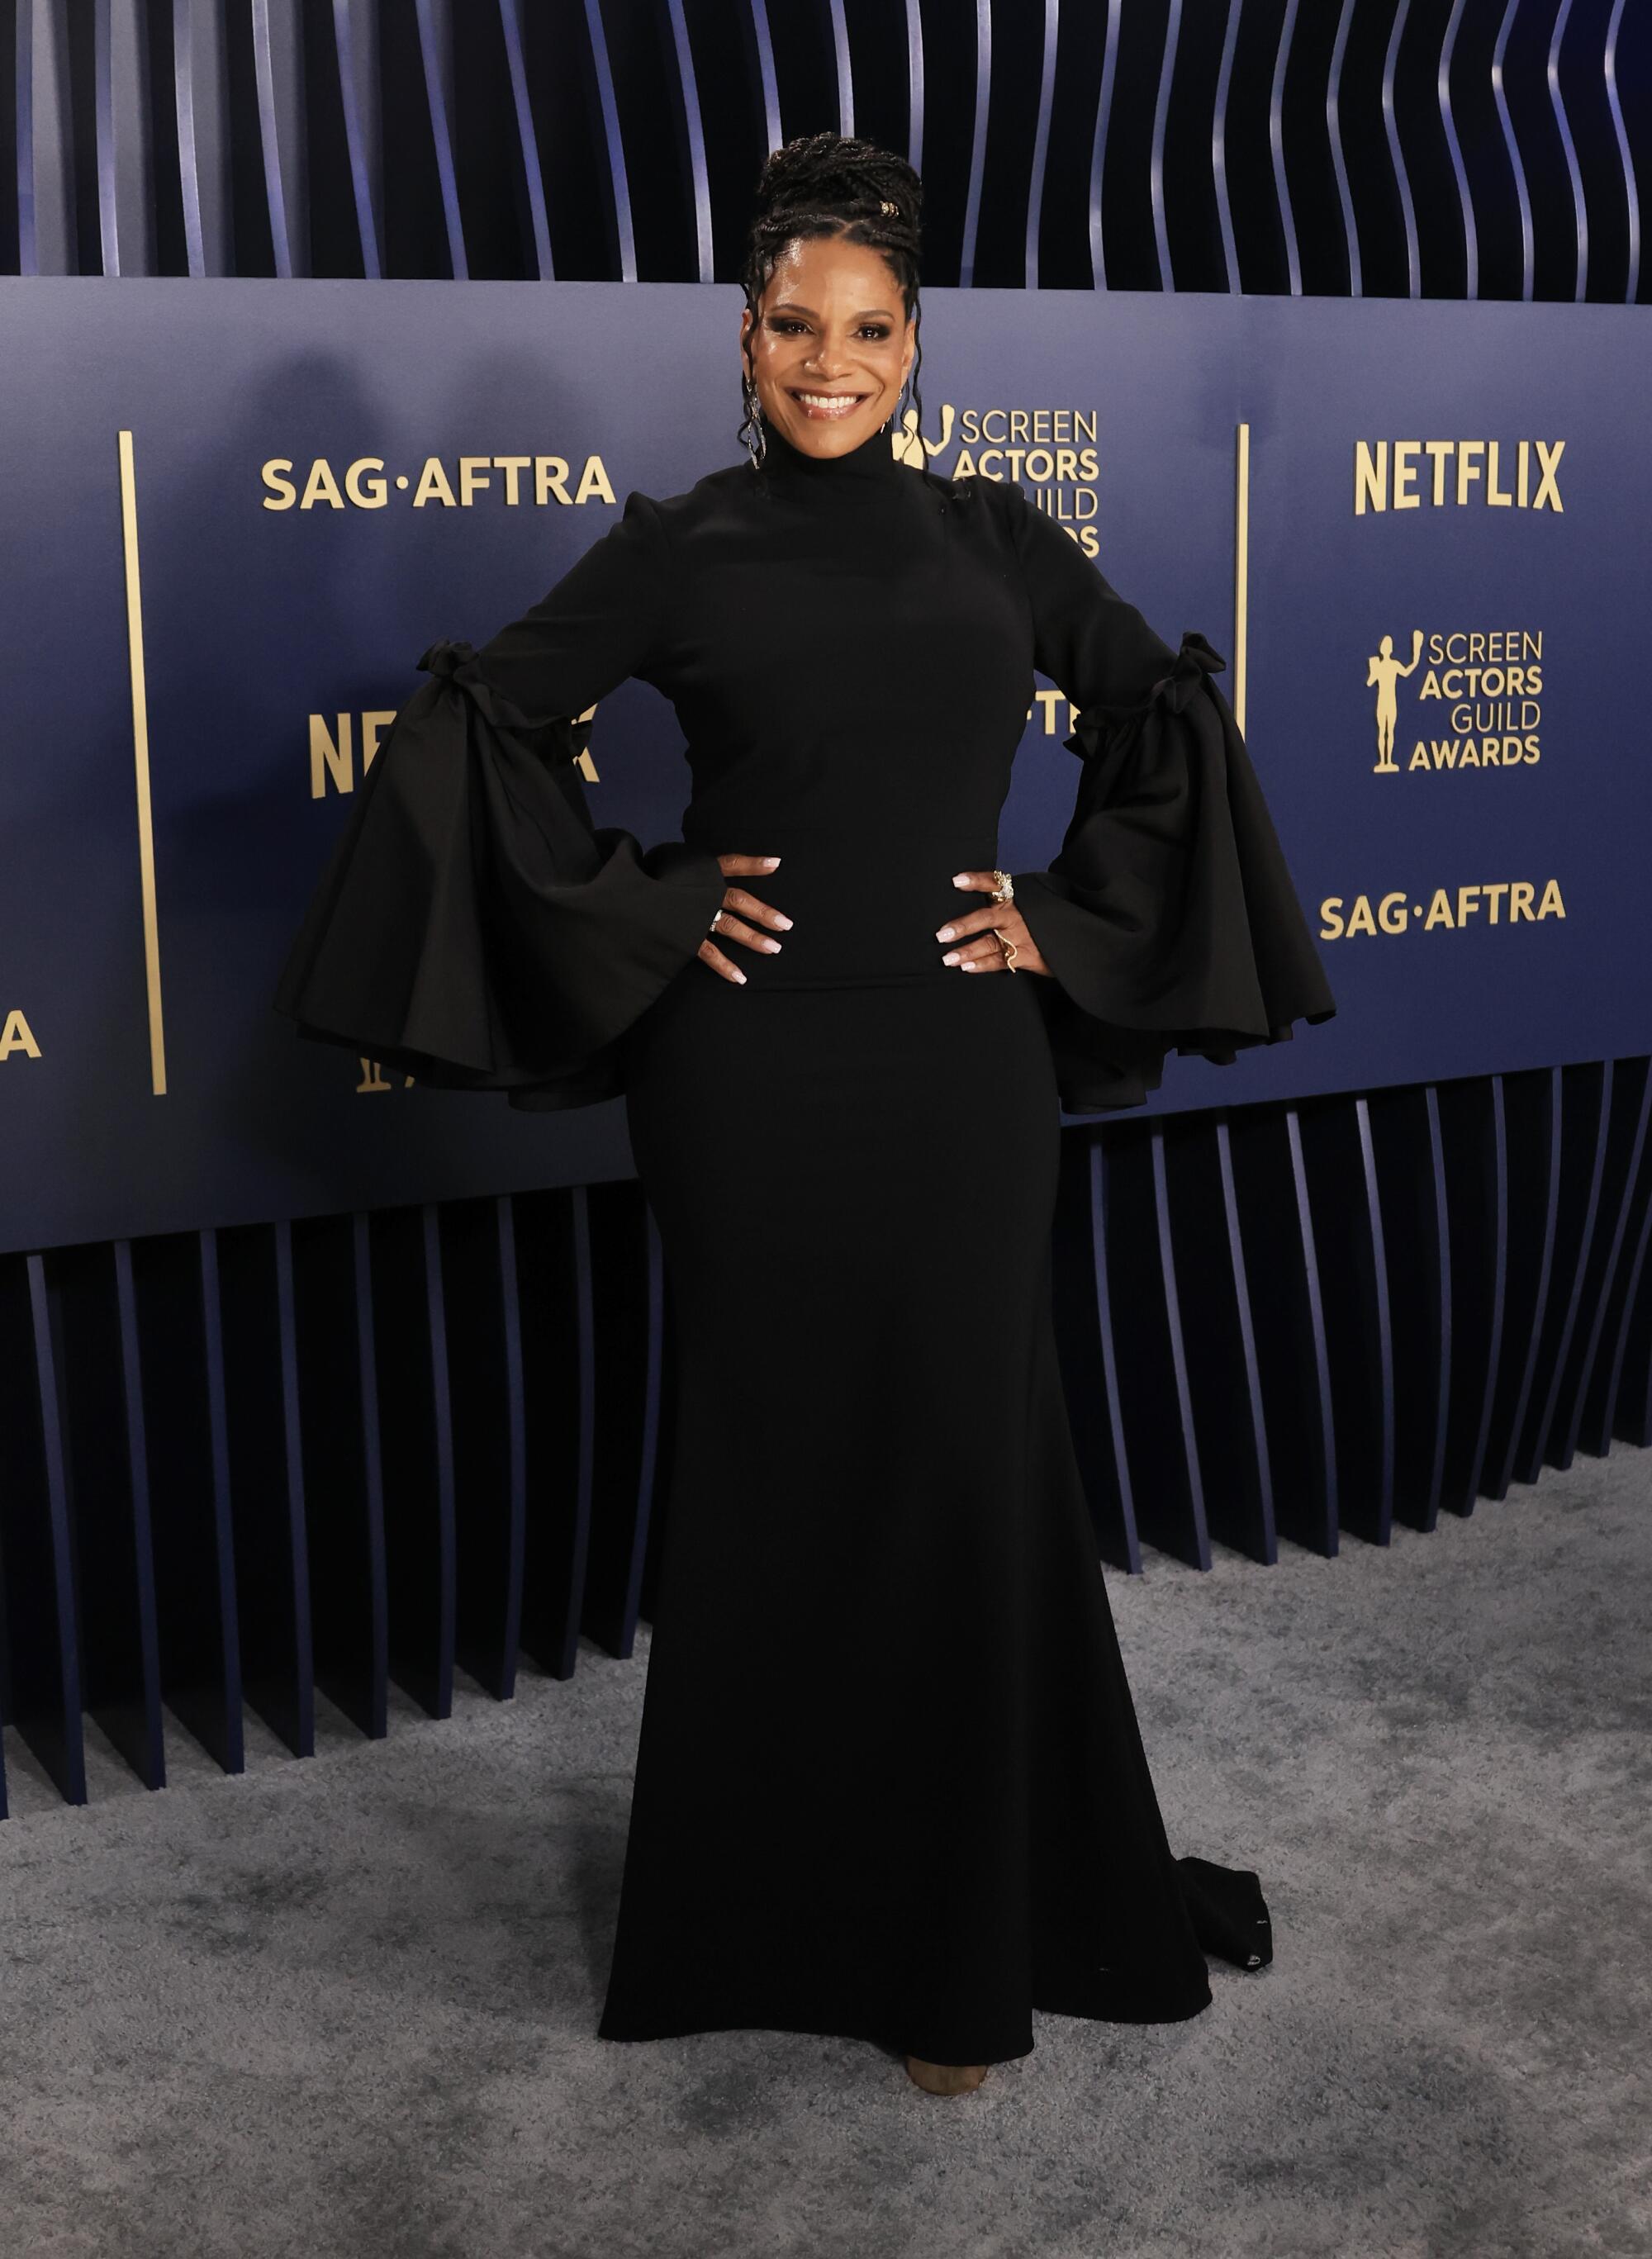 Audra Mcdonald wears a long-sleeved black dress at the SAG Awards.